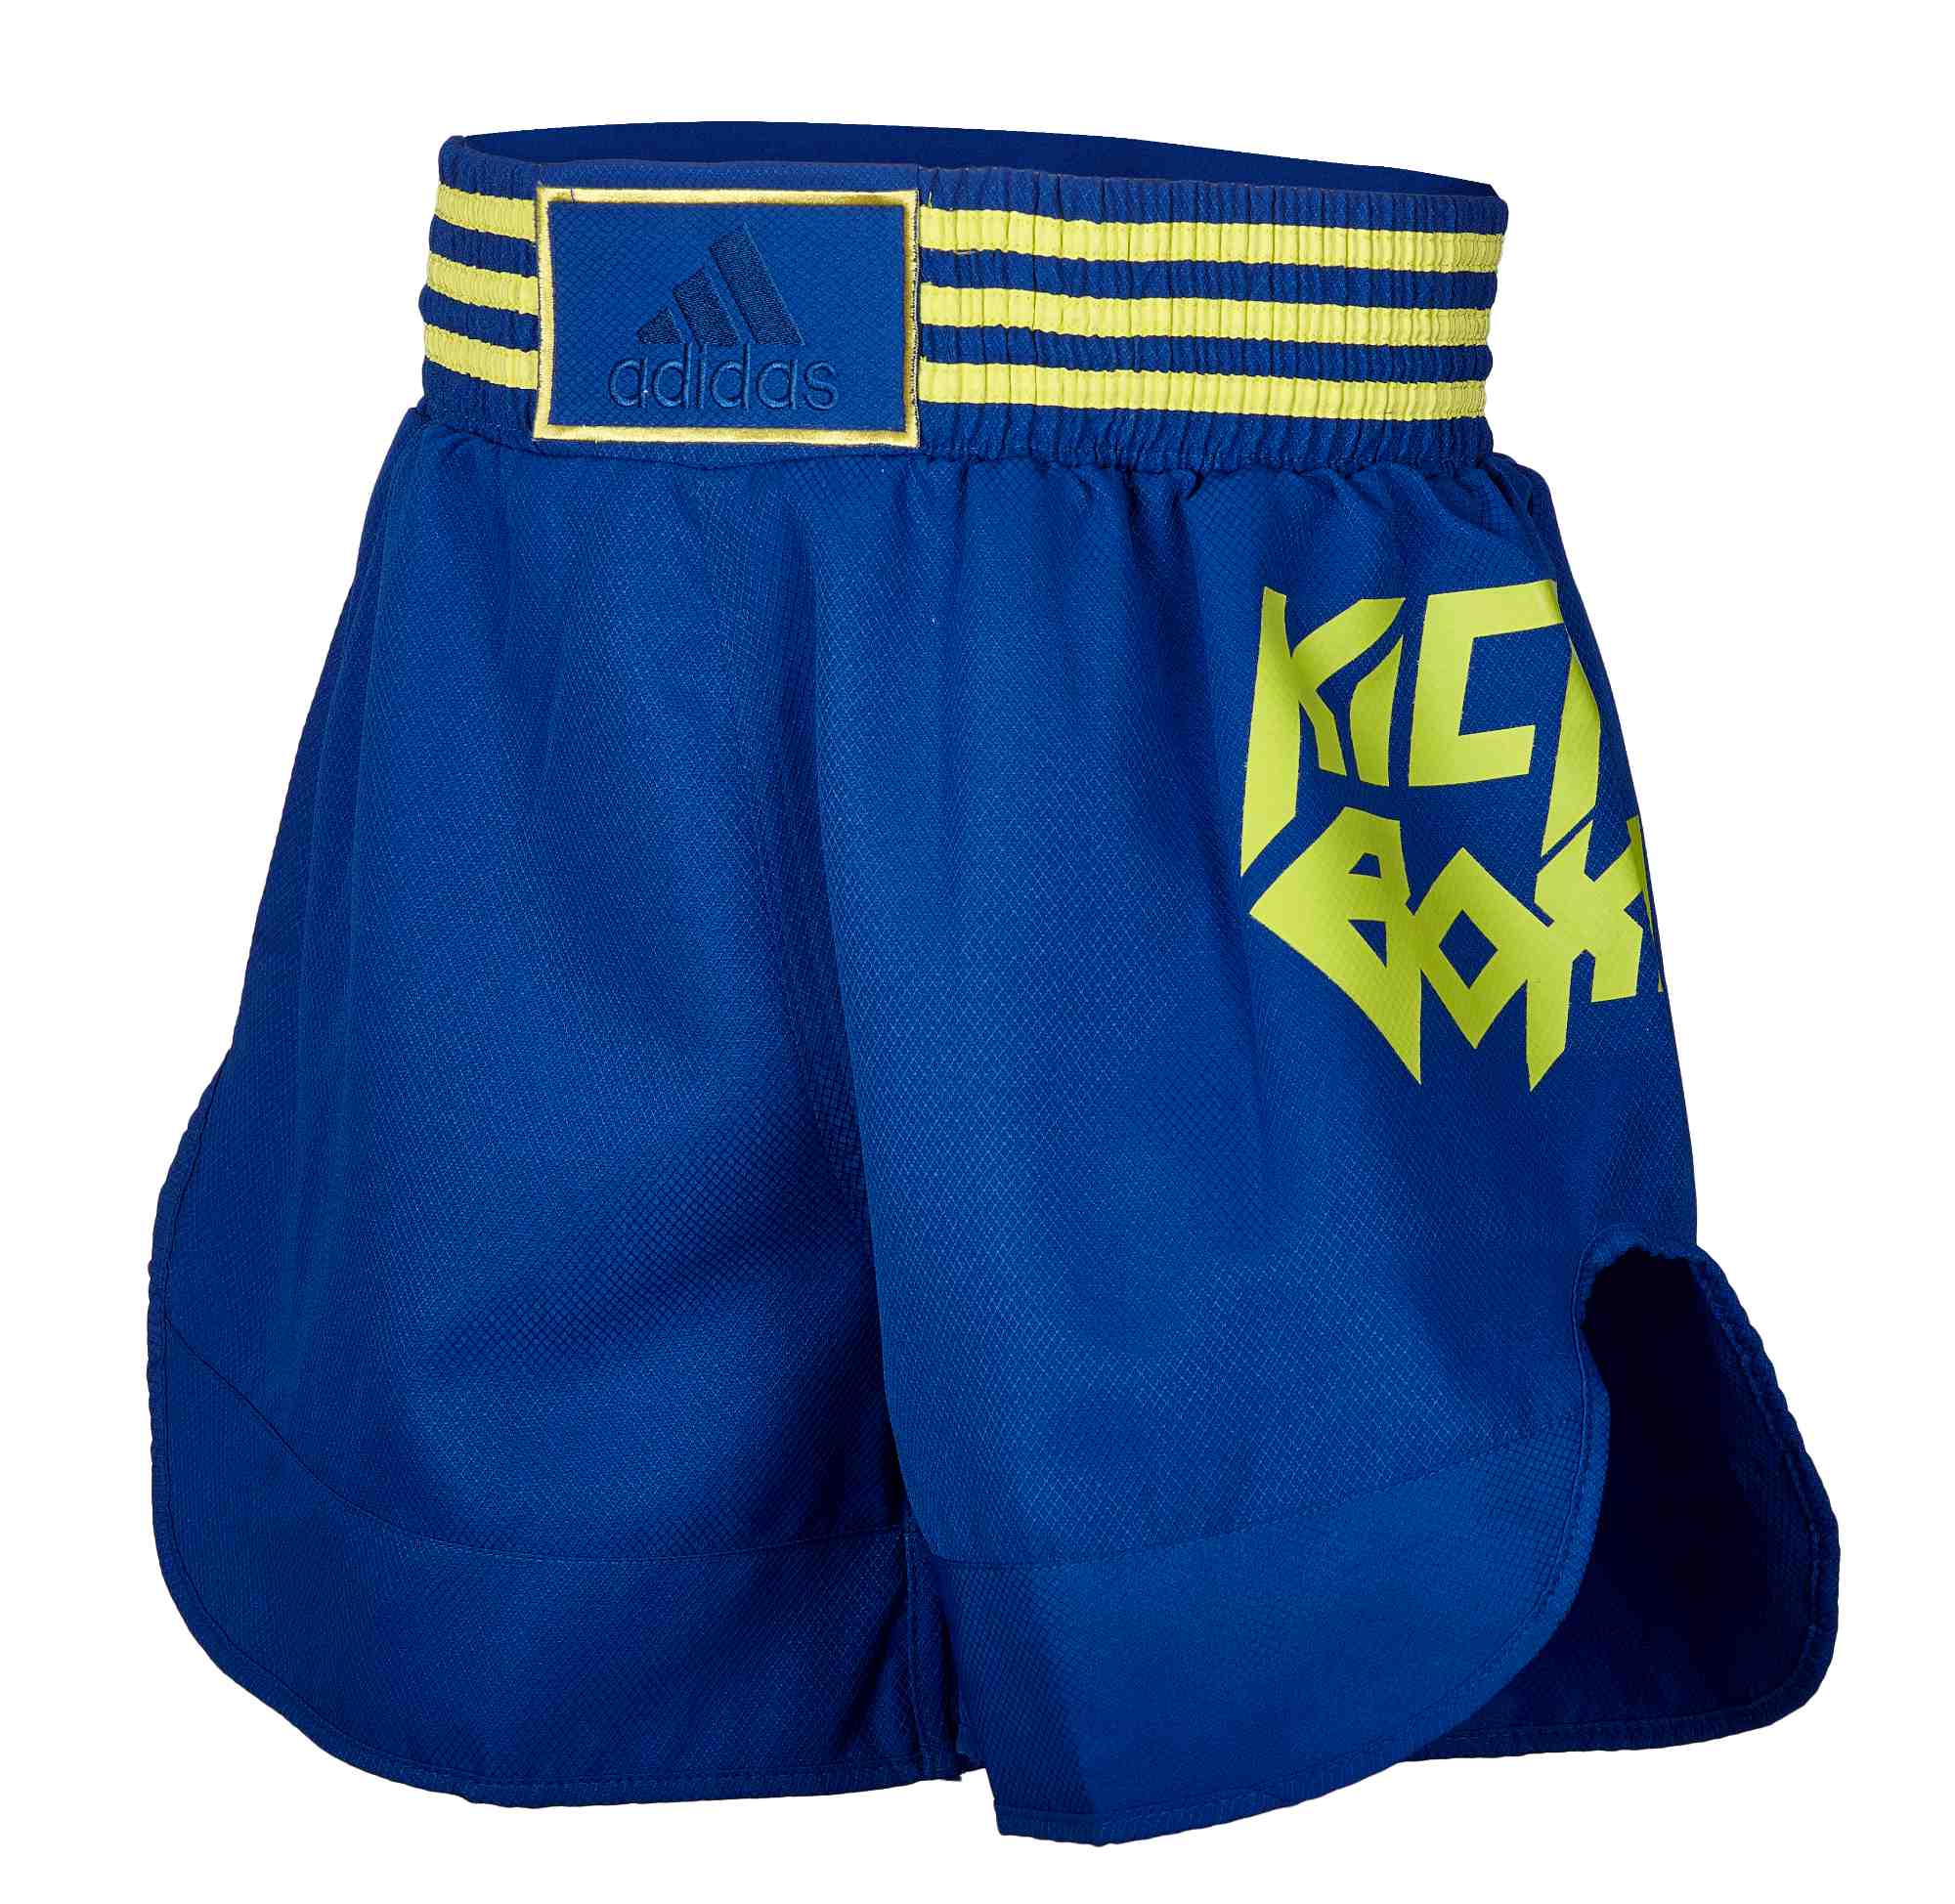 adidas Kick Boxing Shorts ADISKB02 blue/yellow